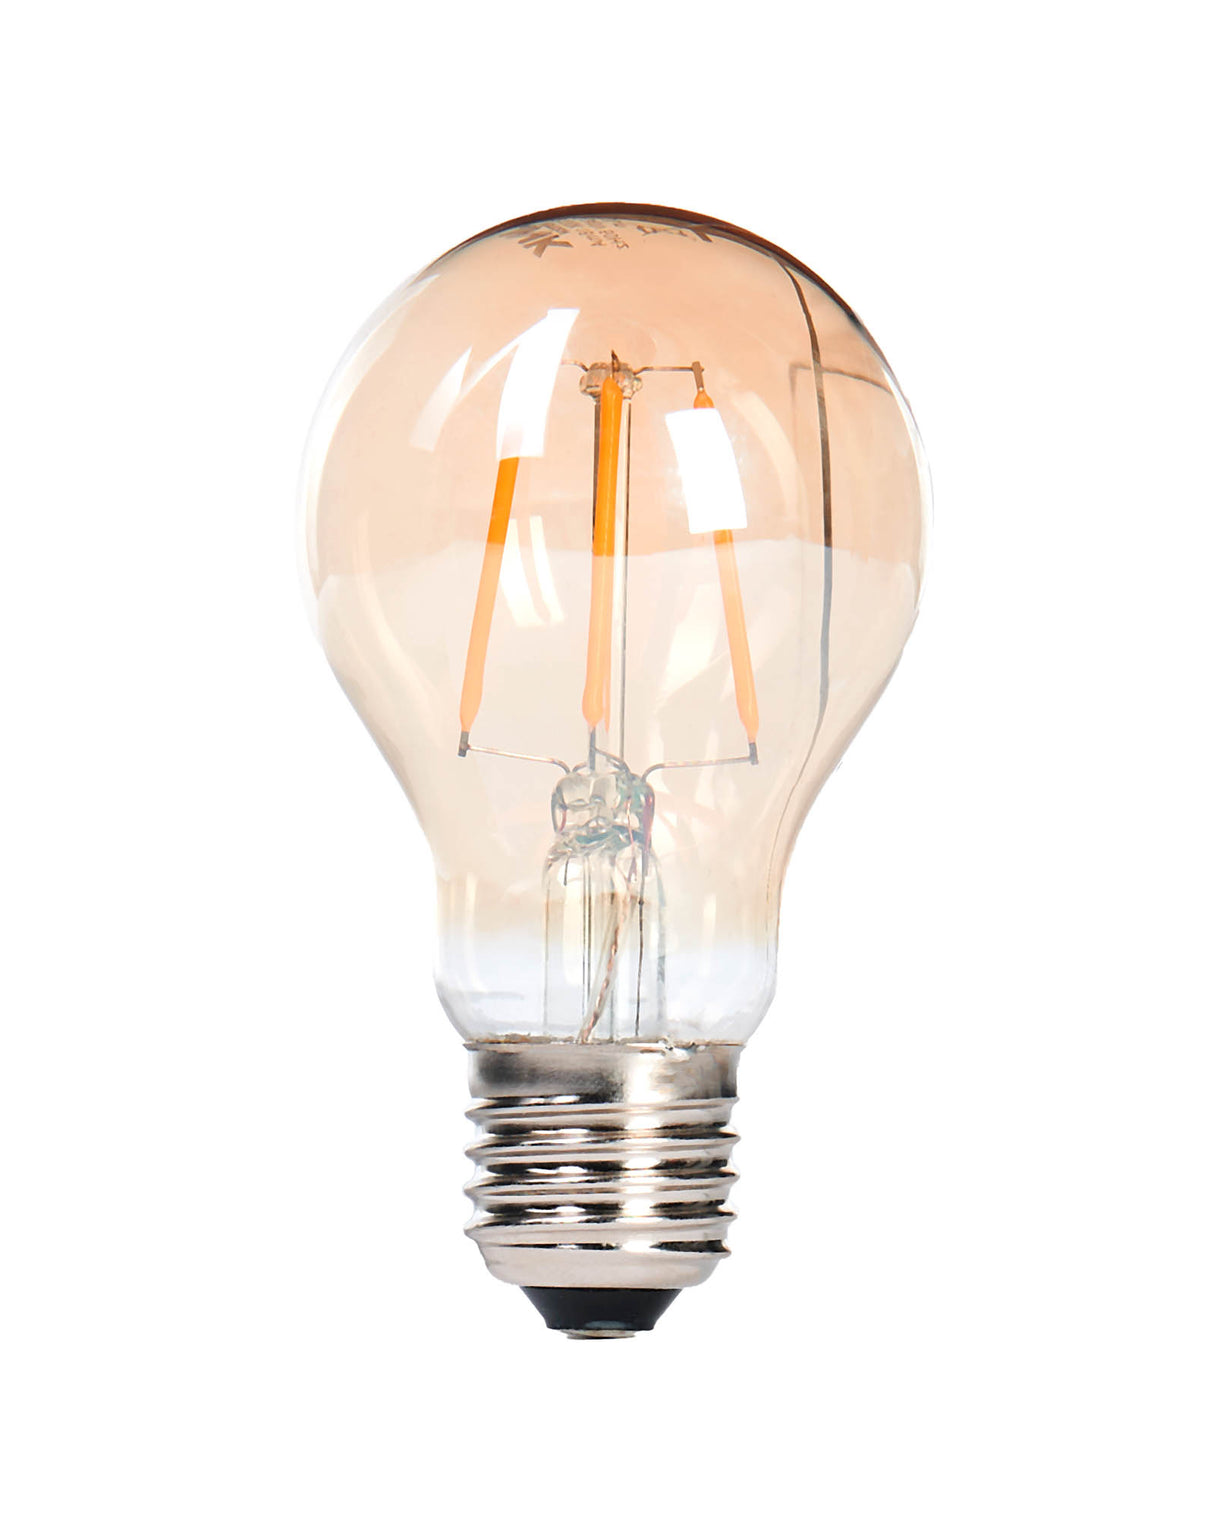 LINK FESTOON 4W E27 Dimmable Filament LED Bulb, Warm White